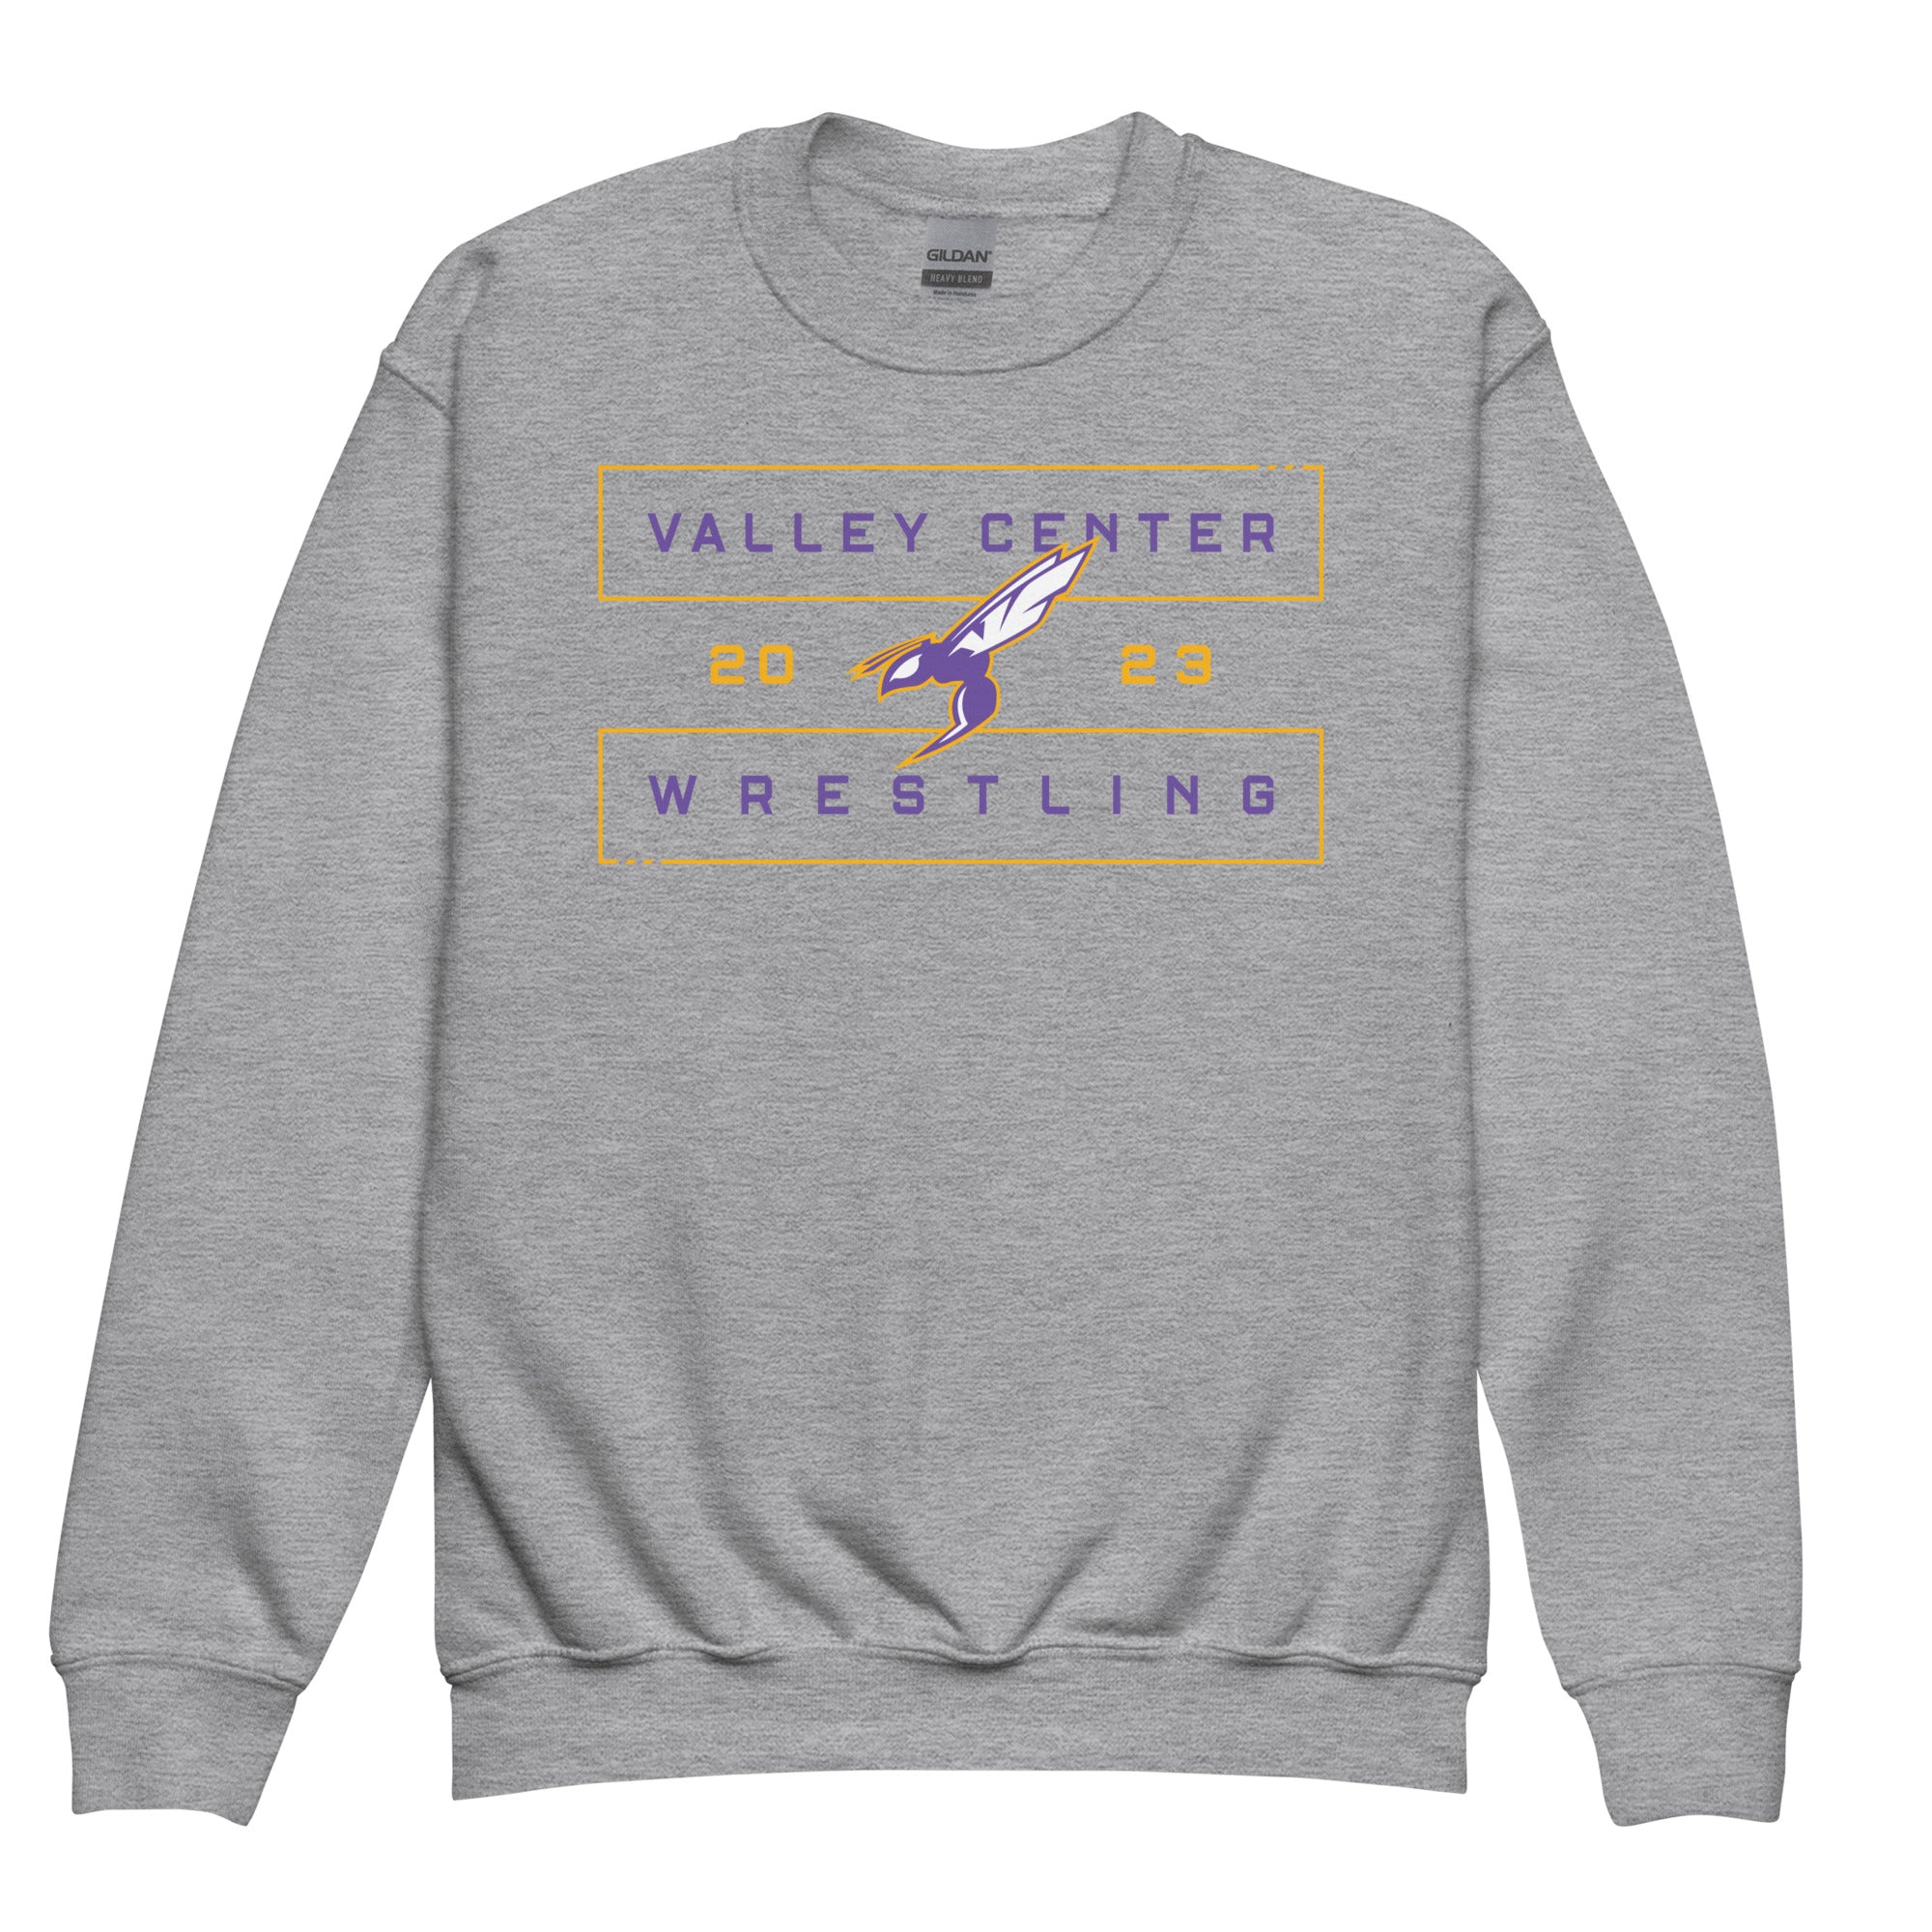 Valley Center Wrestling Club Youth Crewneck Sweatshirt